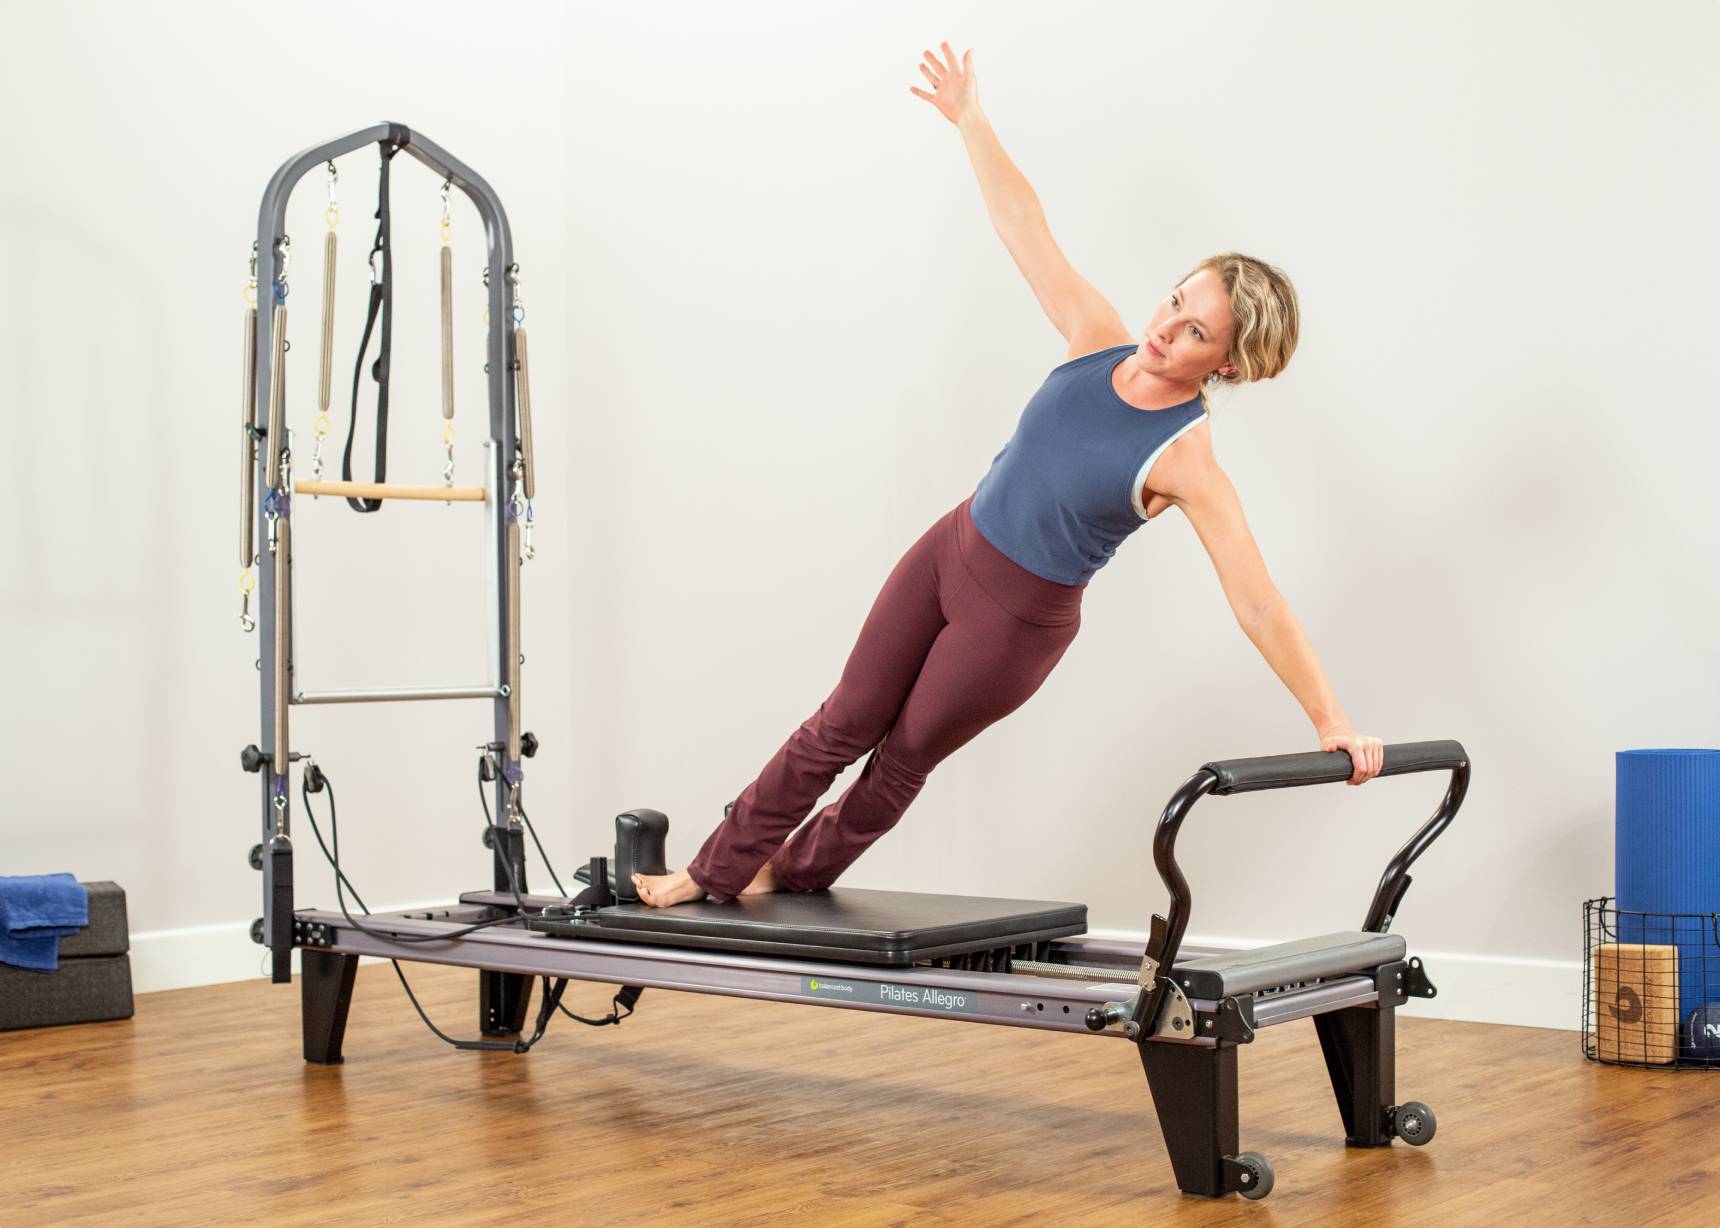 Pilates Reformer - Balanced Body Studio Reformer with Tower